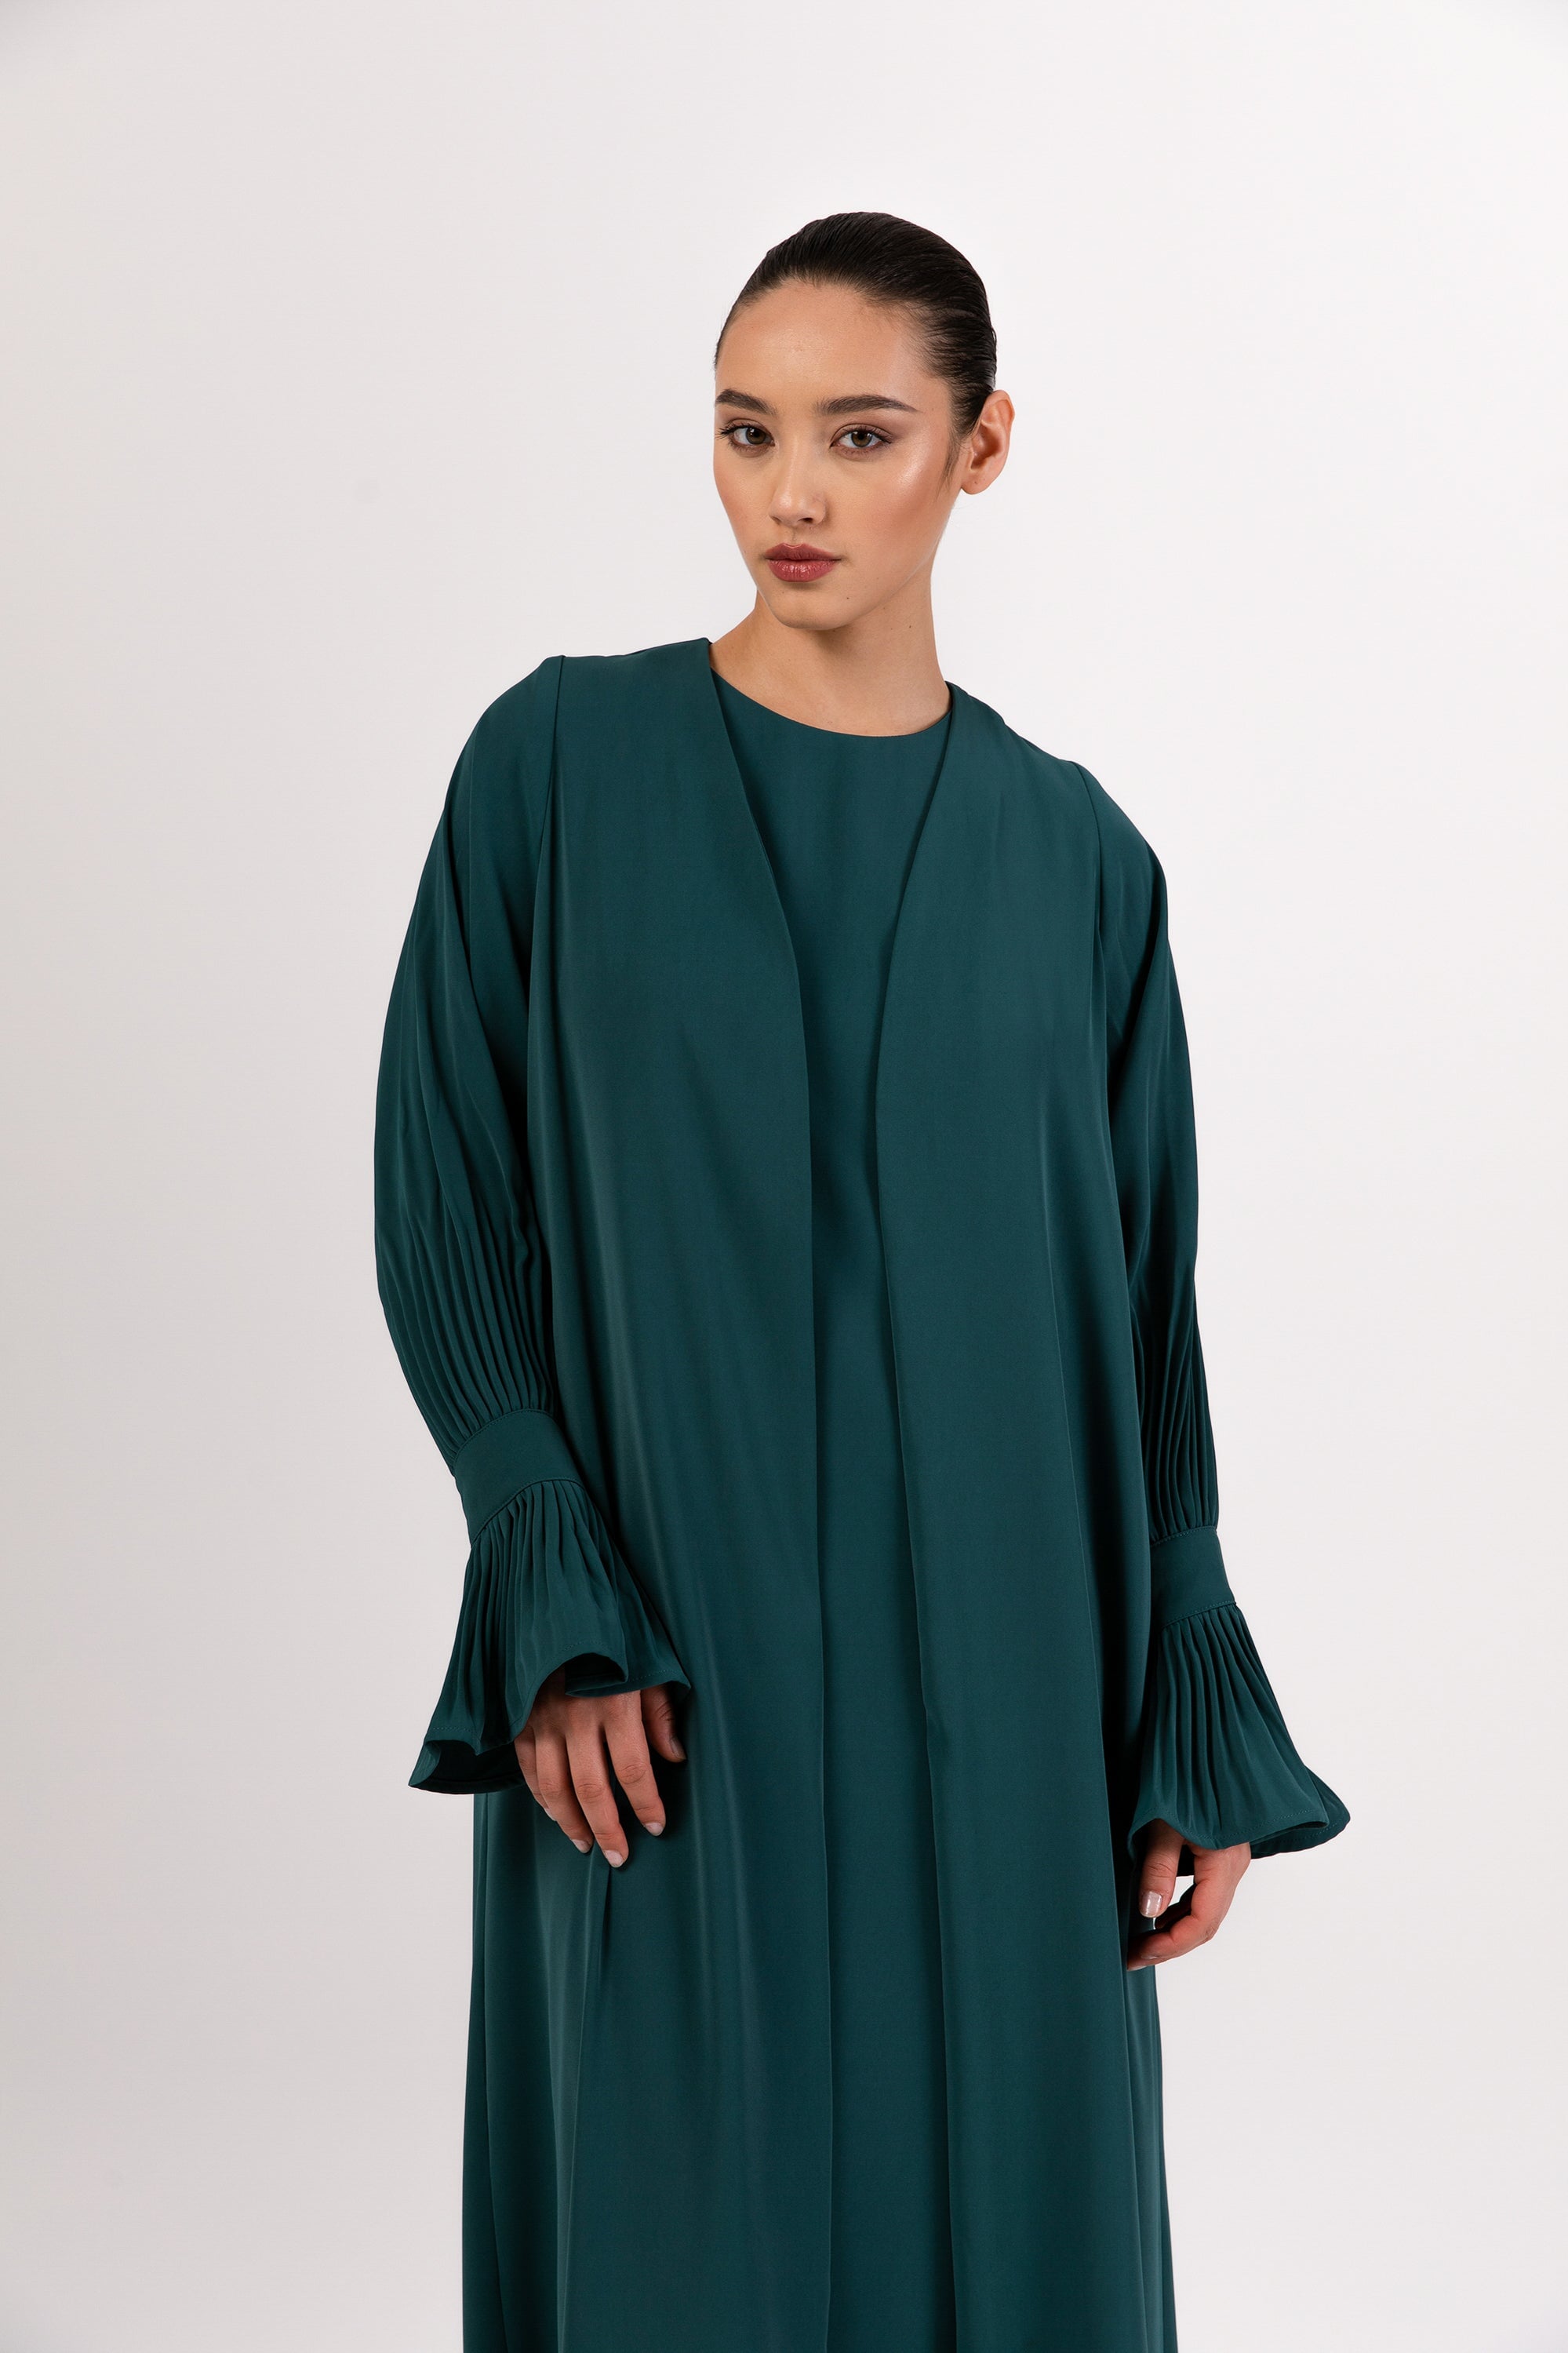 Jamila Cinched Sleeve Open Abaya and Dress Set- Teal Abayas Veiled 